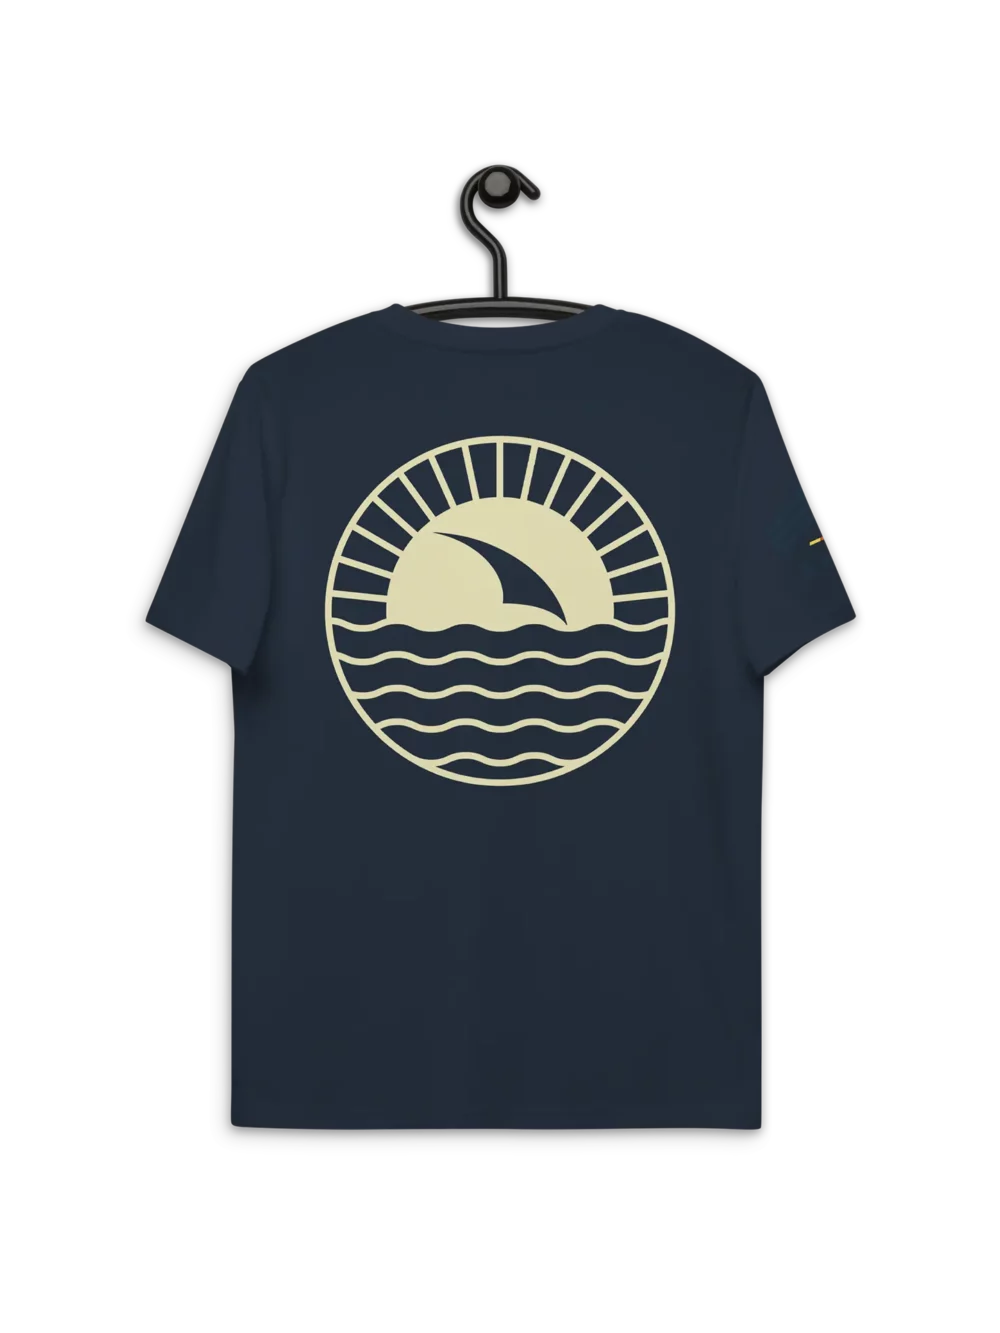 Windsurfer Sunrise French Navy Premium Organic Cotton Eco-friendly T-Shirt by KOAV